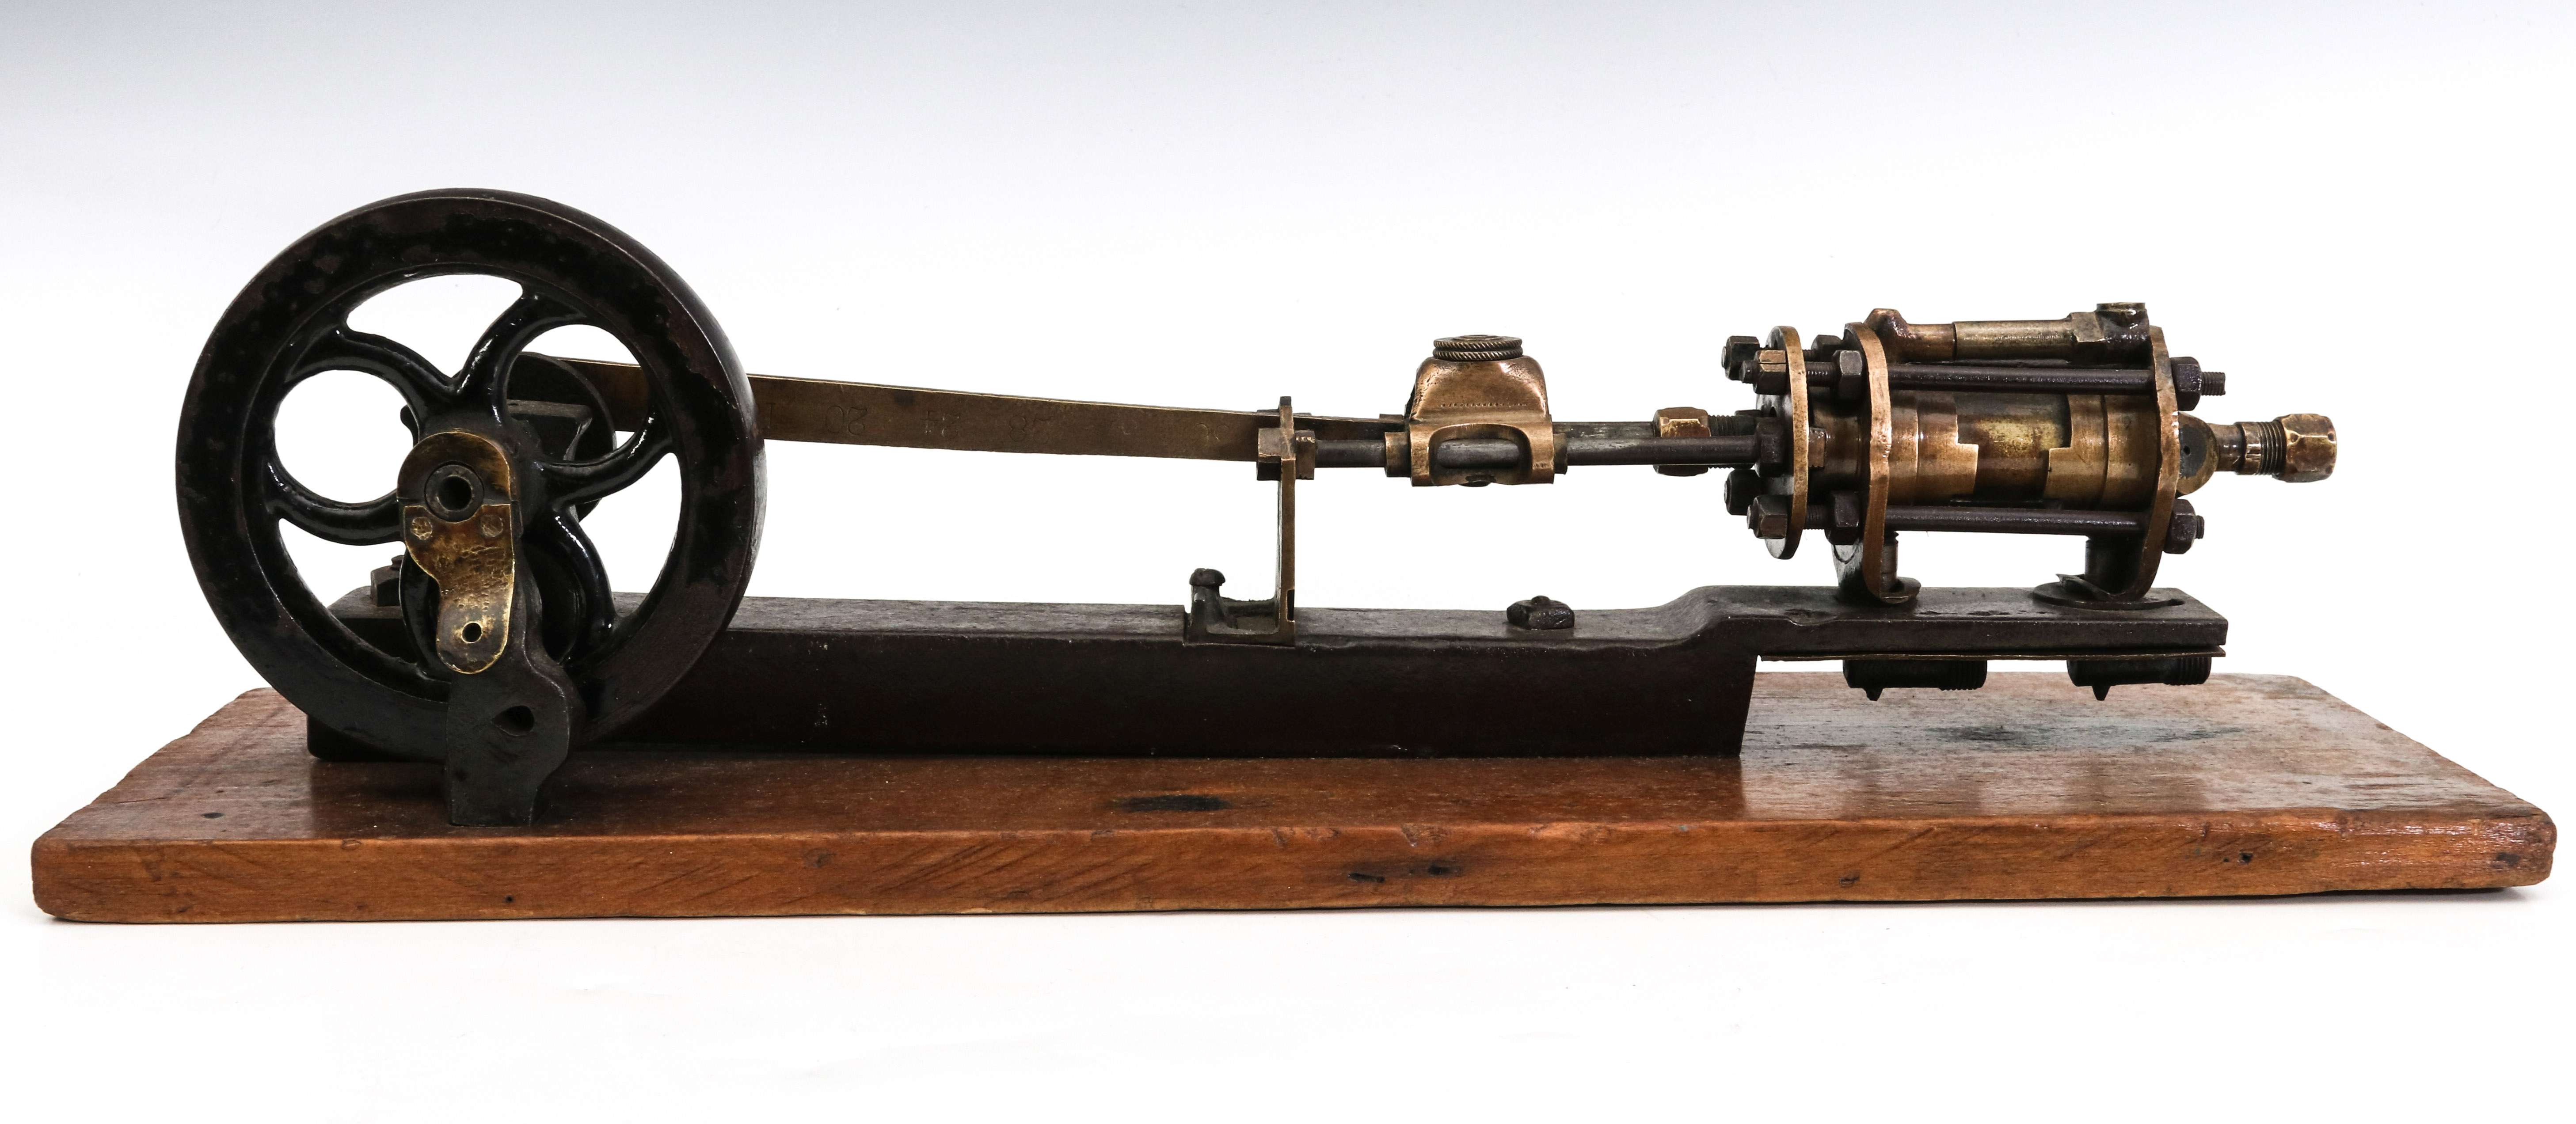 INTERESTING 1877 IRON & BRASS ENGINE DEMONSTRATOR